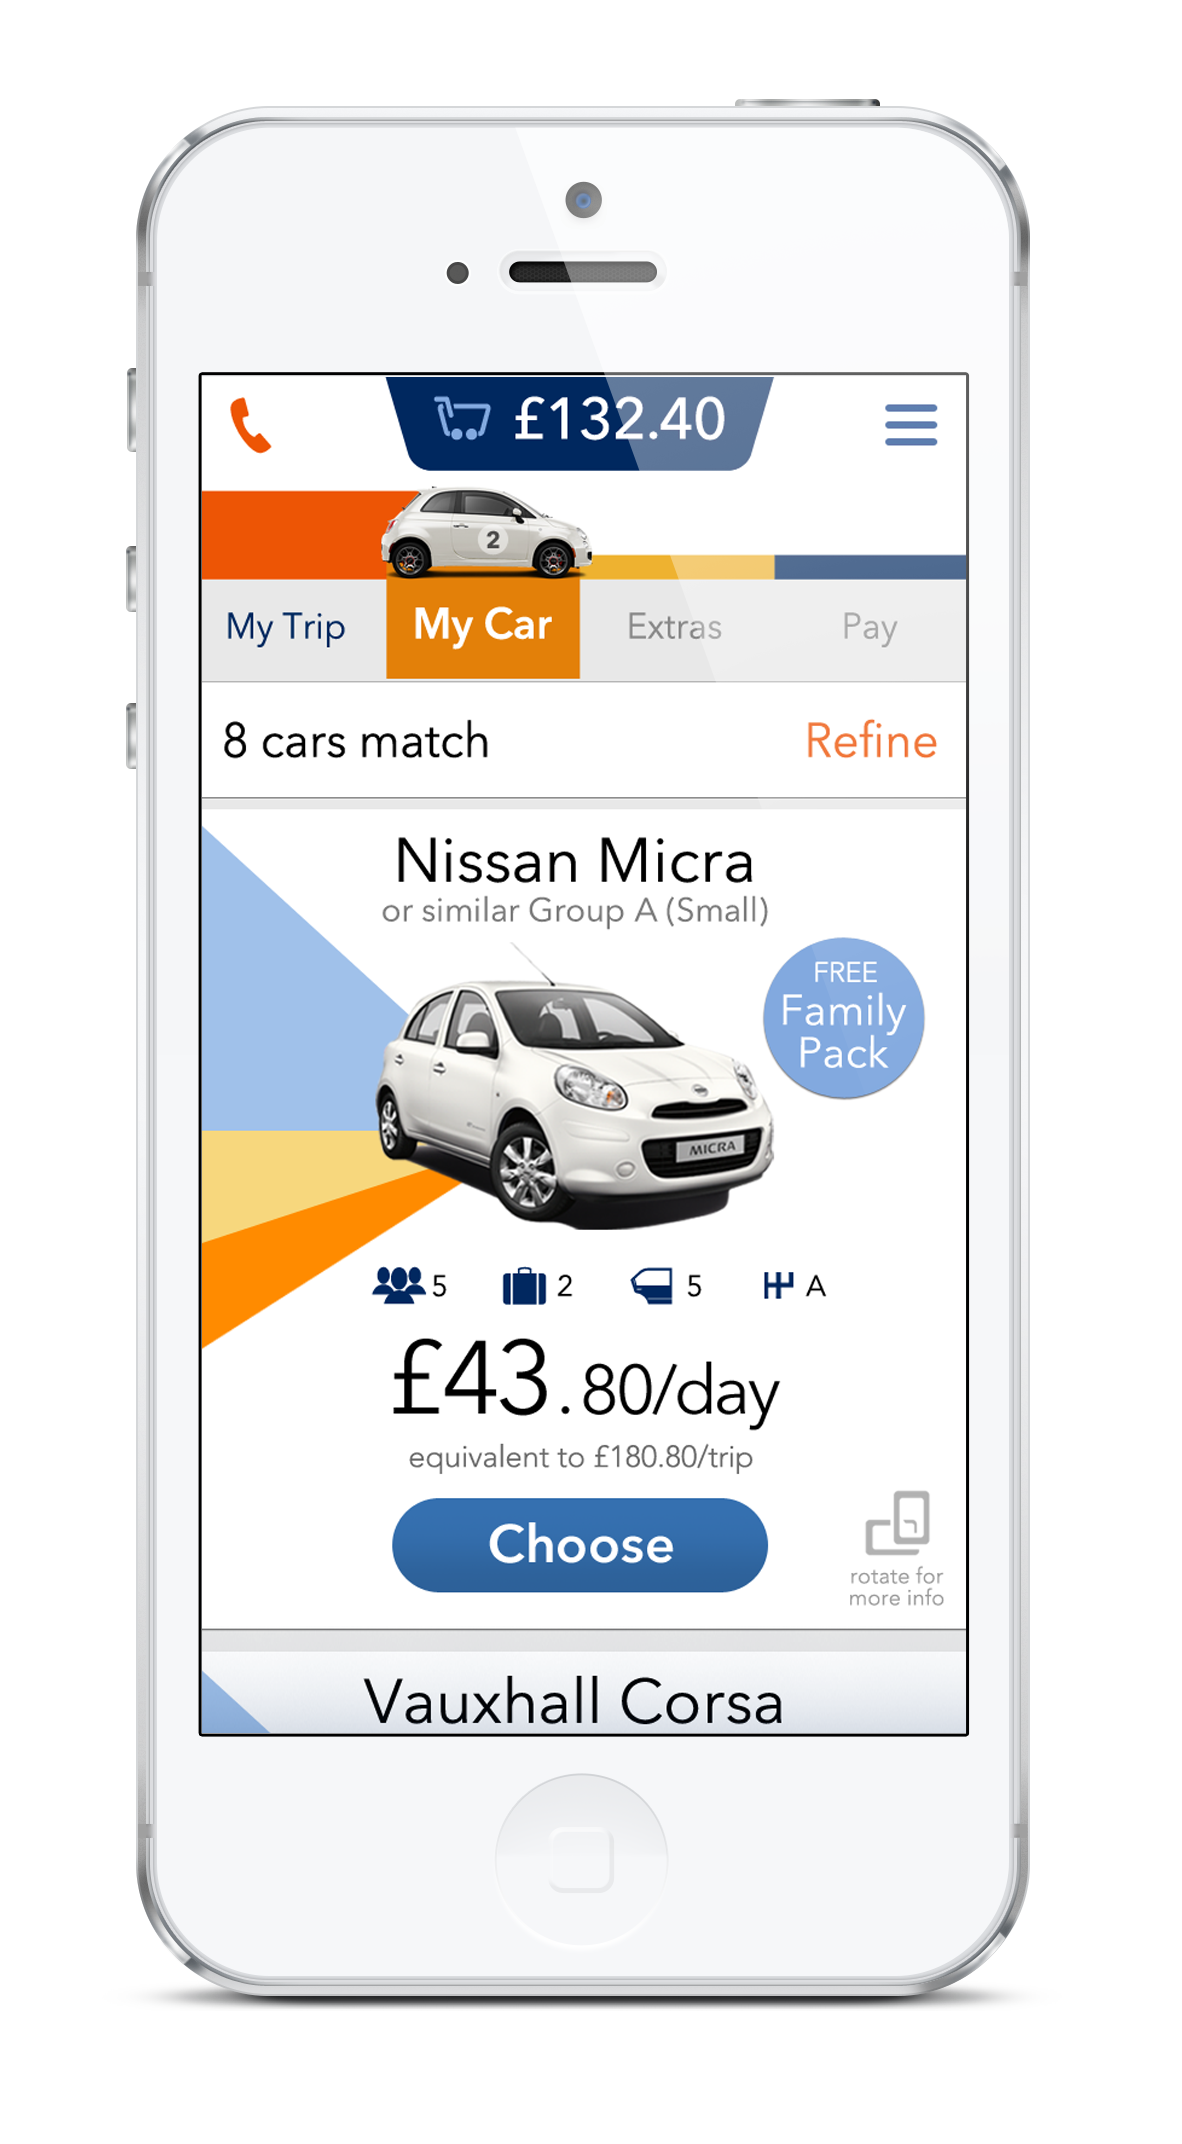 Budget car rental smartphone app